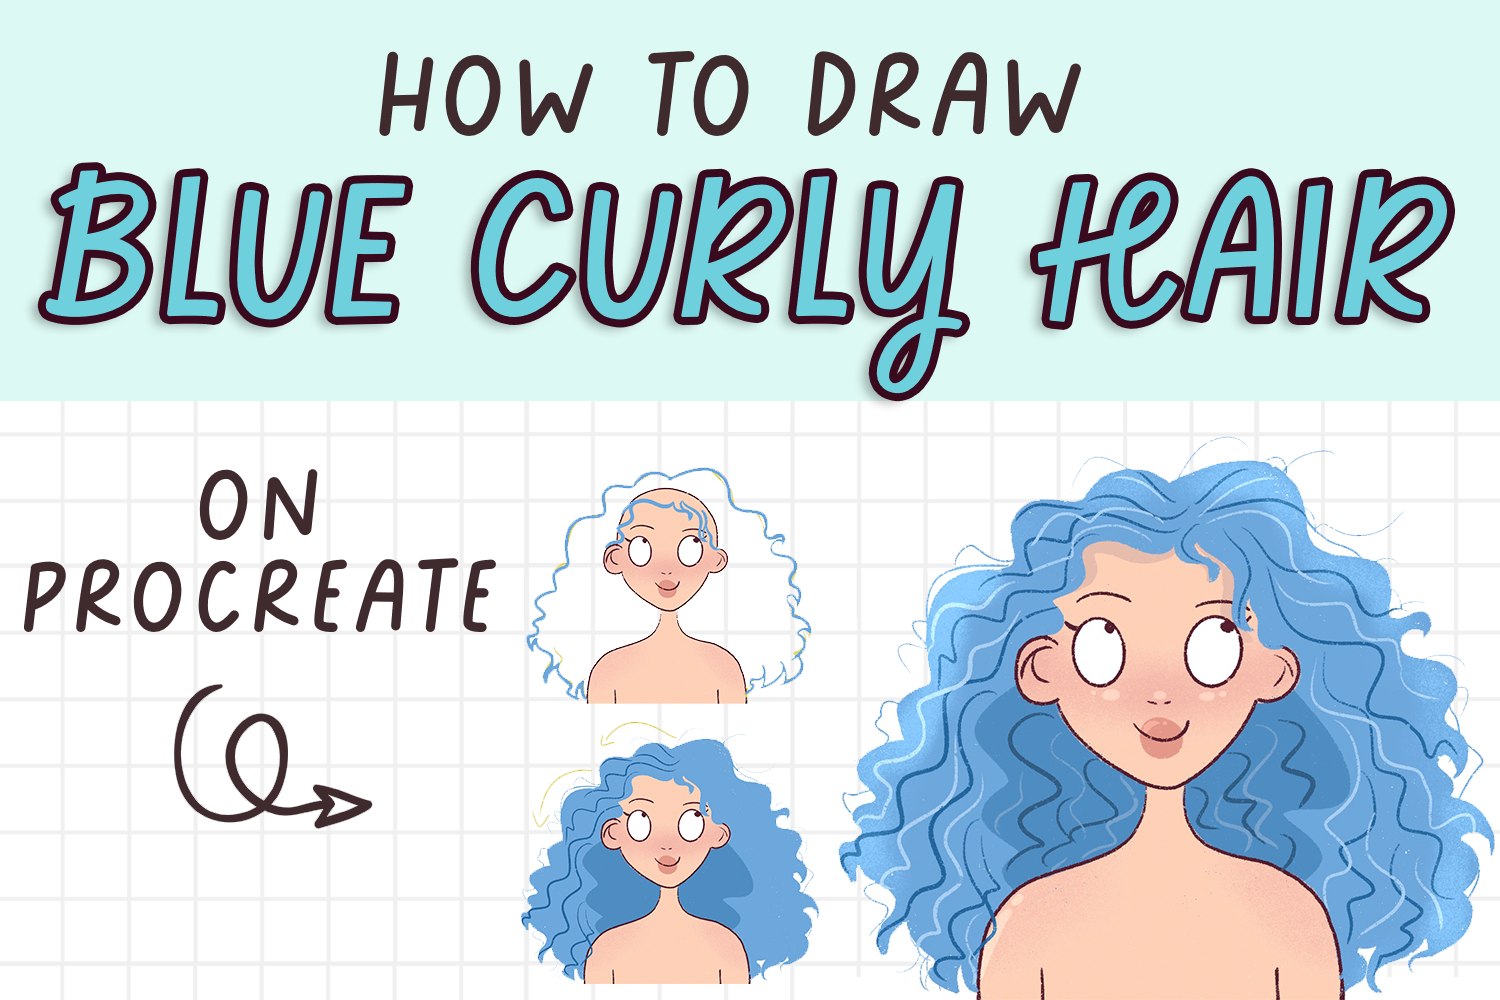 Blue Curly Hair Cartoon Kid - wide 5